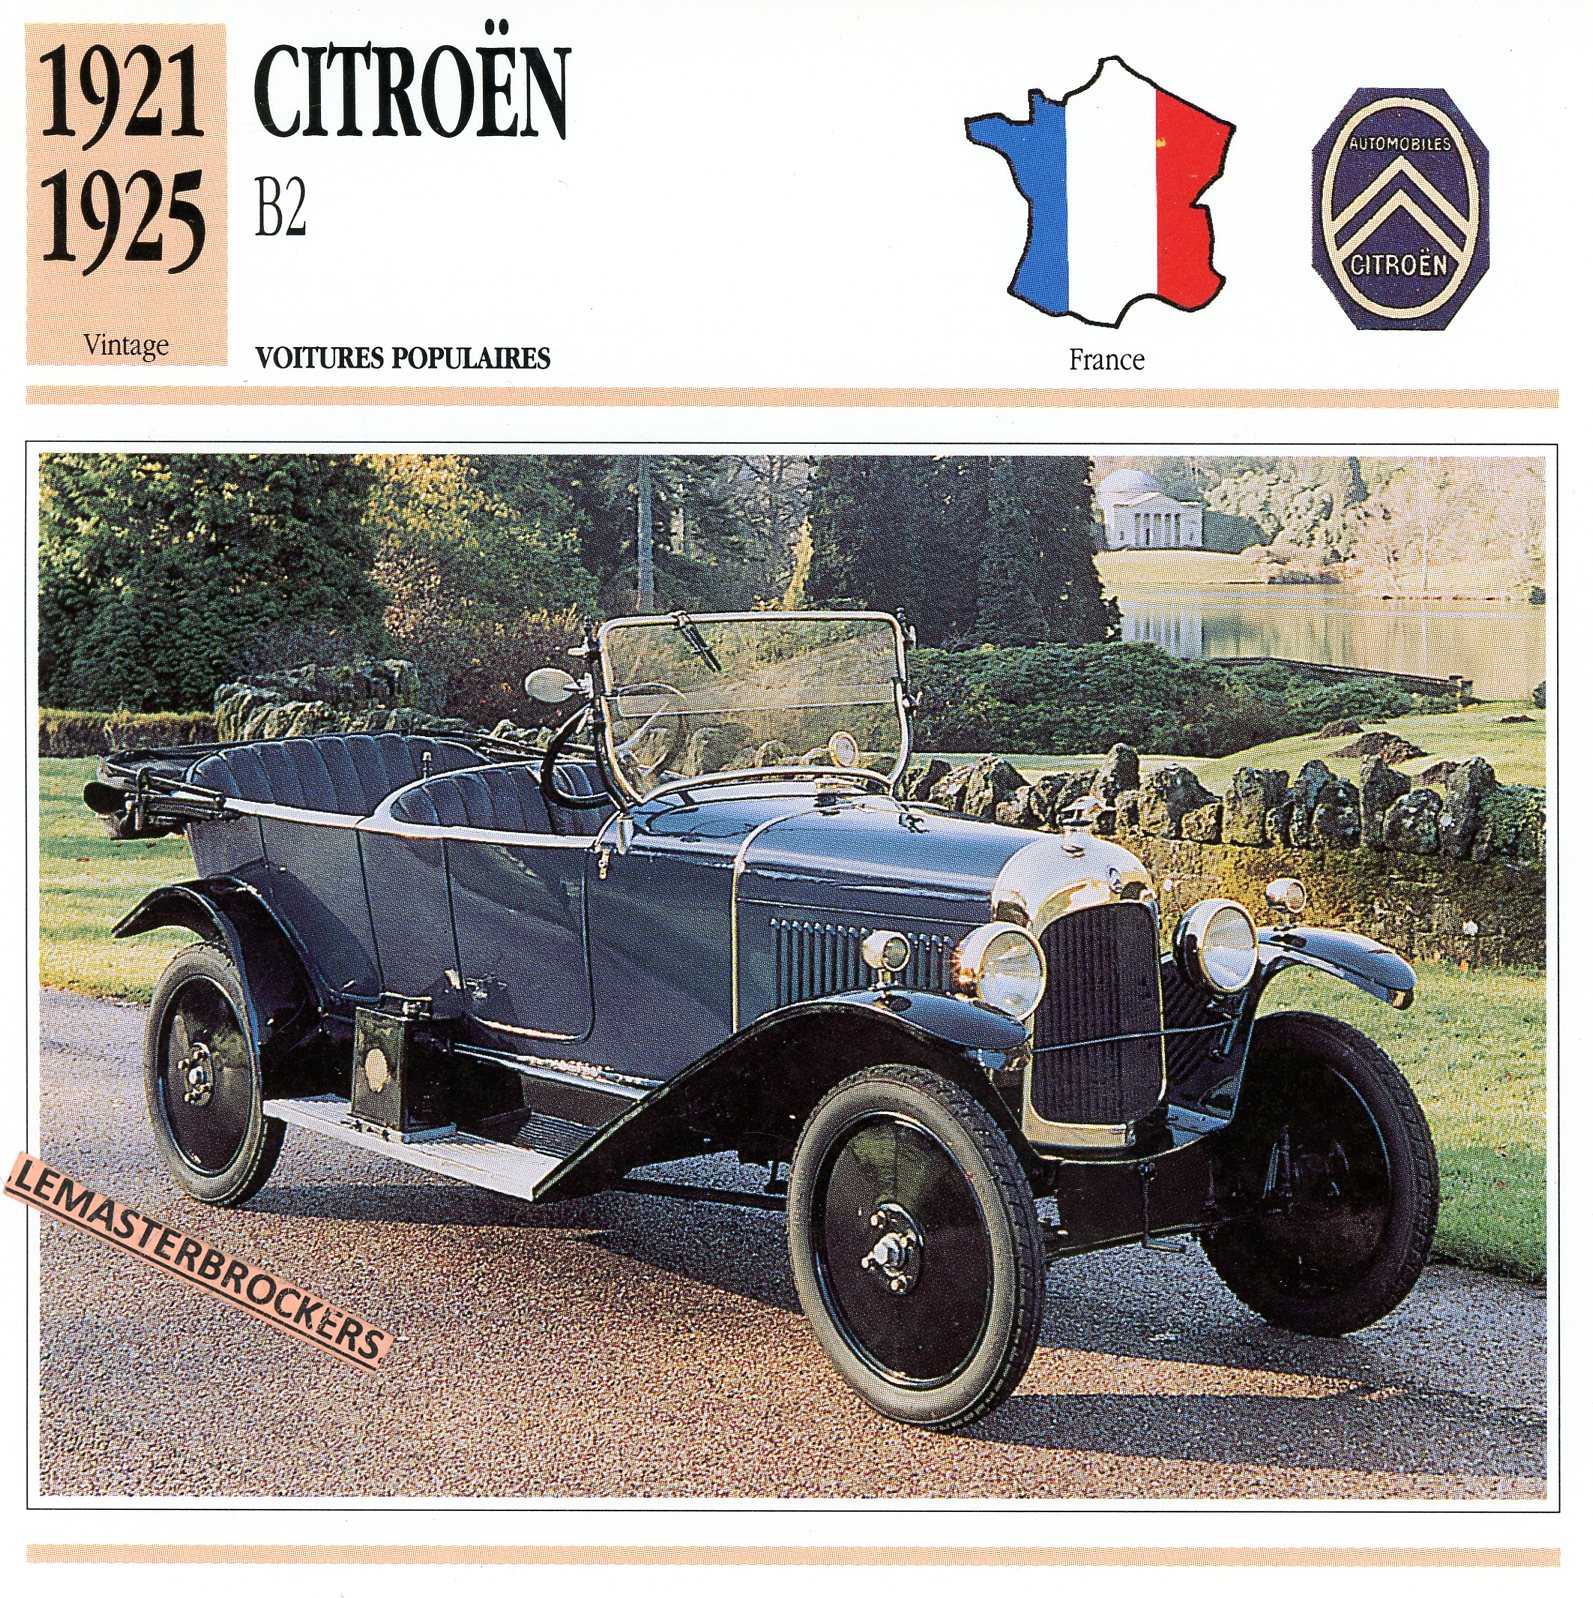 CITROËN B2 1921 1925 - FICHE AUTO ATLAS - CARS CARD